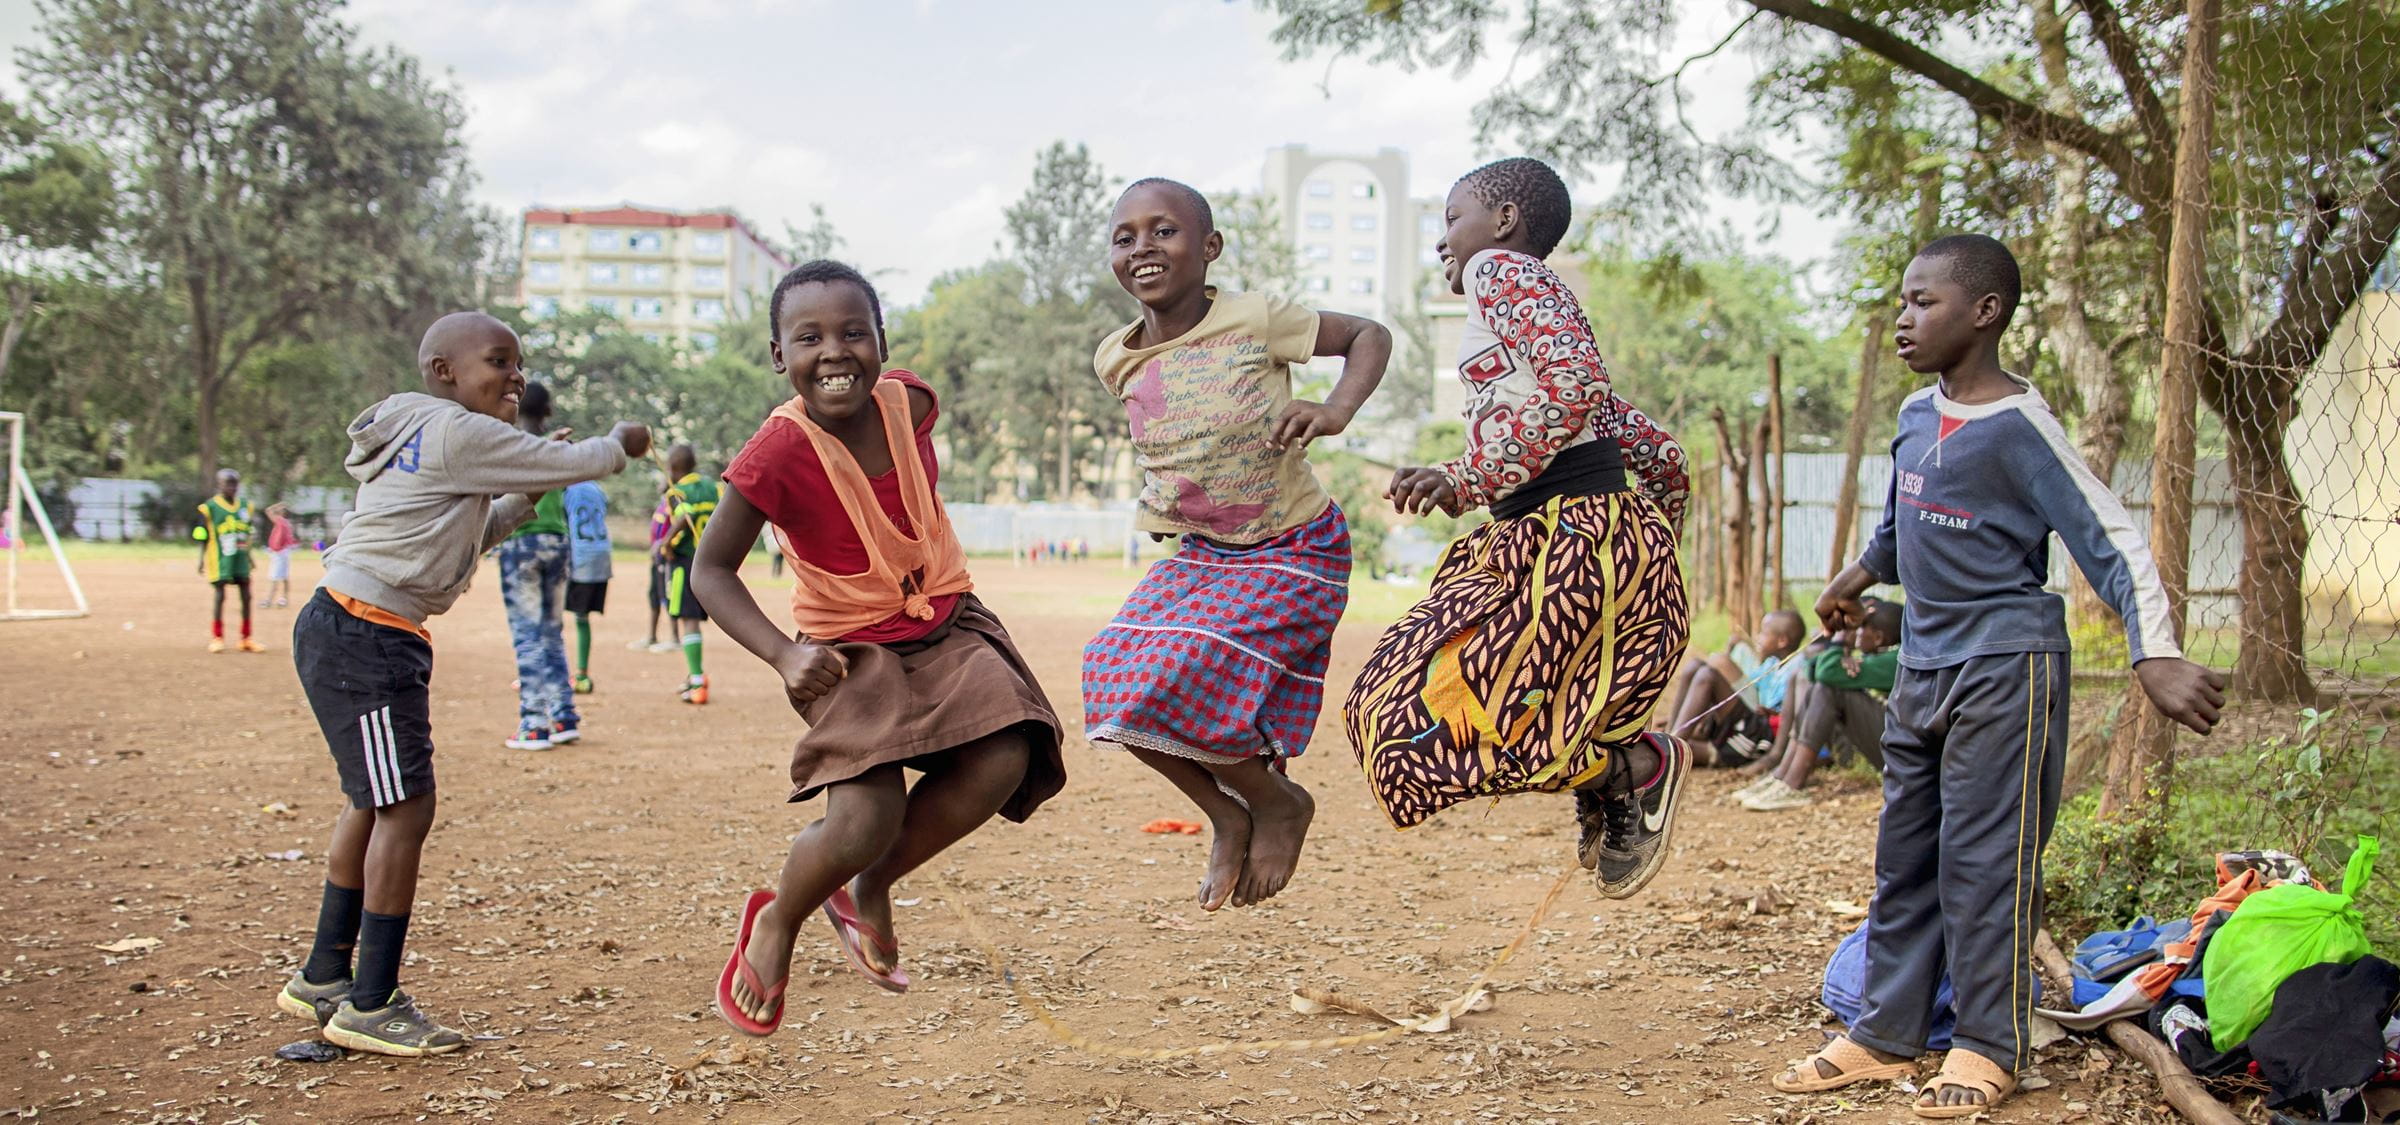 Kinder springen Seil, Jubelbild. Kenia, Nairobi, St. John's. (Quelle: Lars Heidrich)